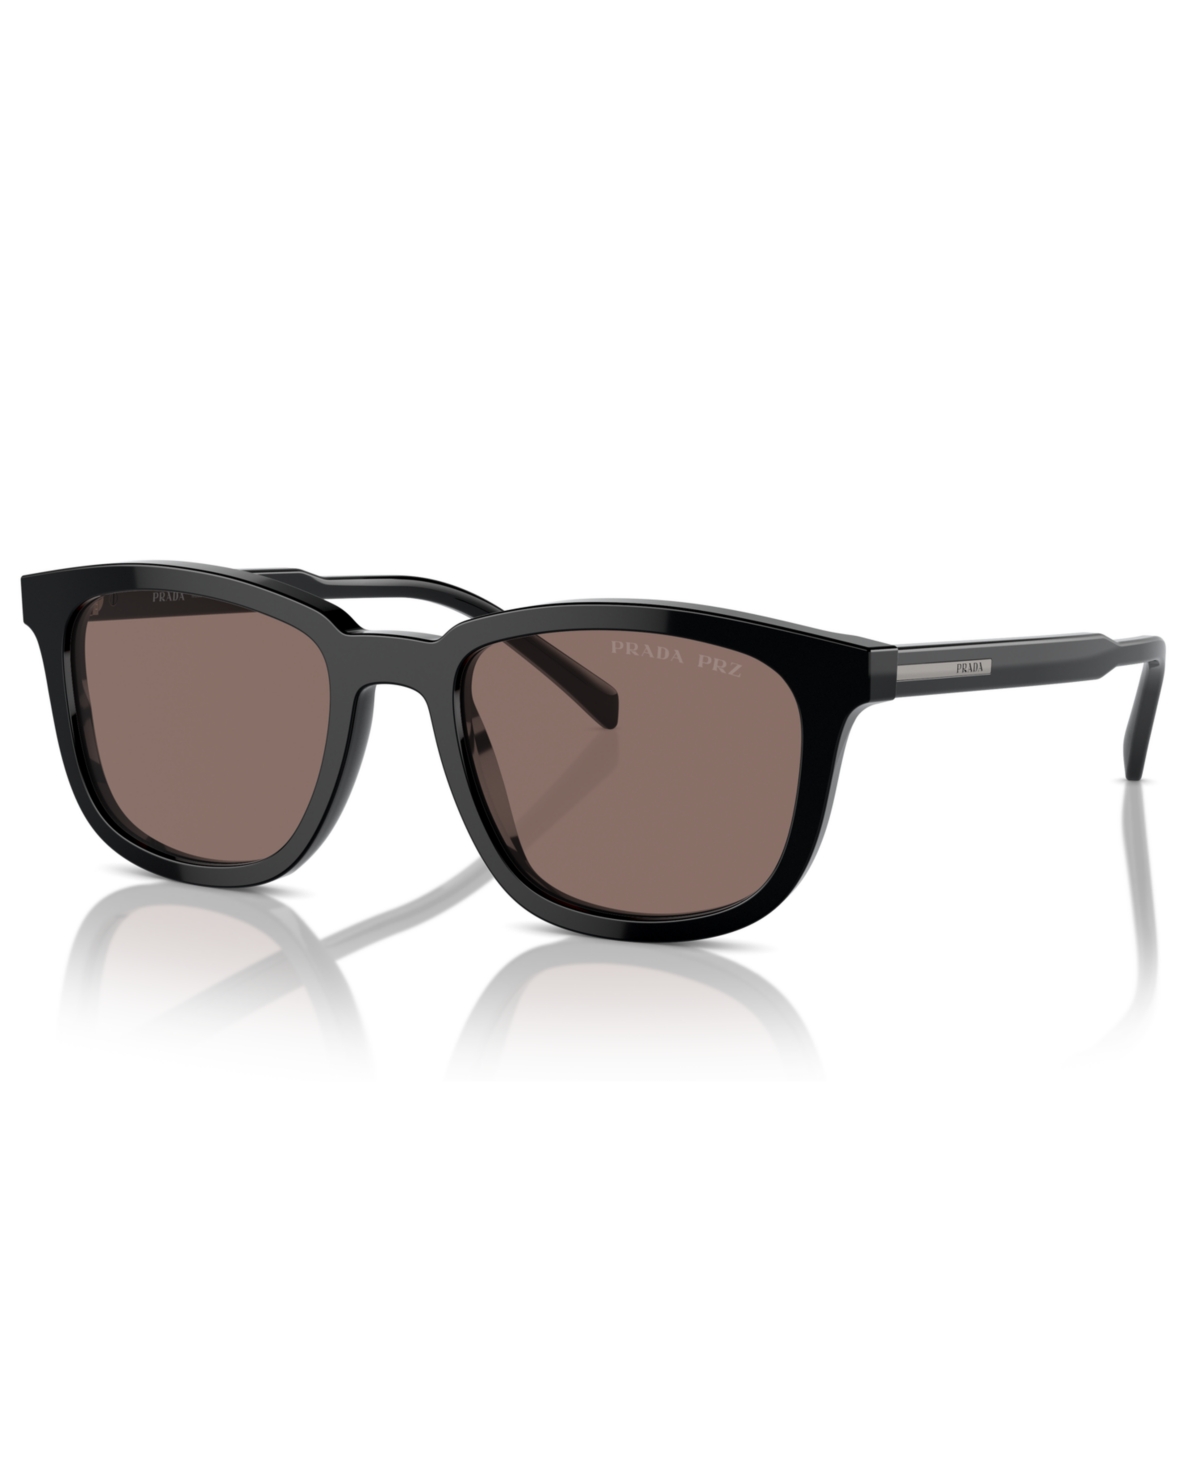 Men's Polarized Sunglasses, Pr A21S - Black